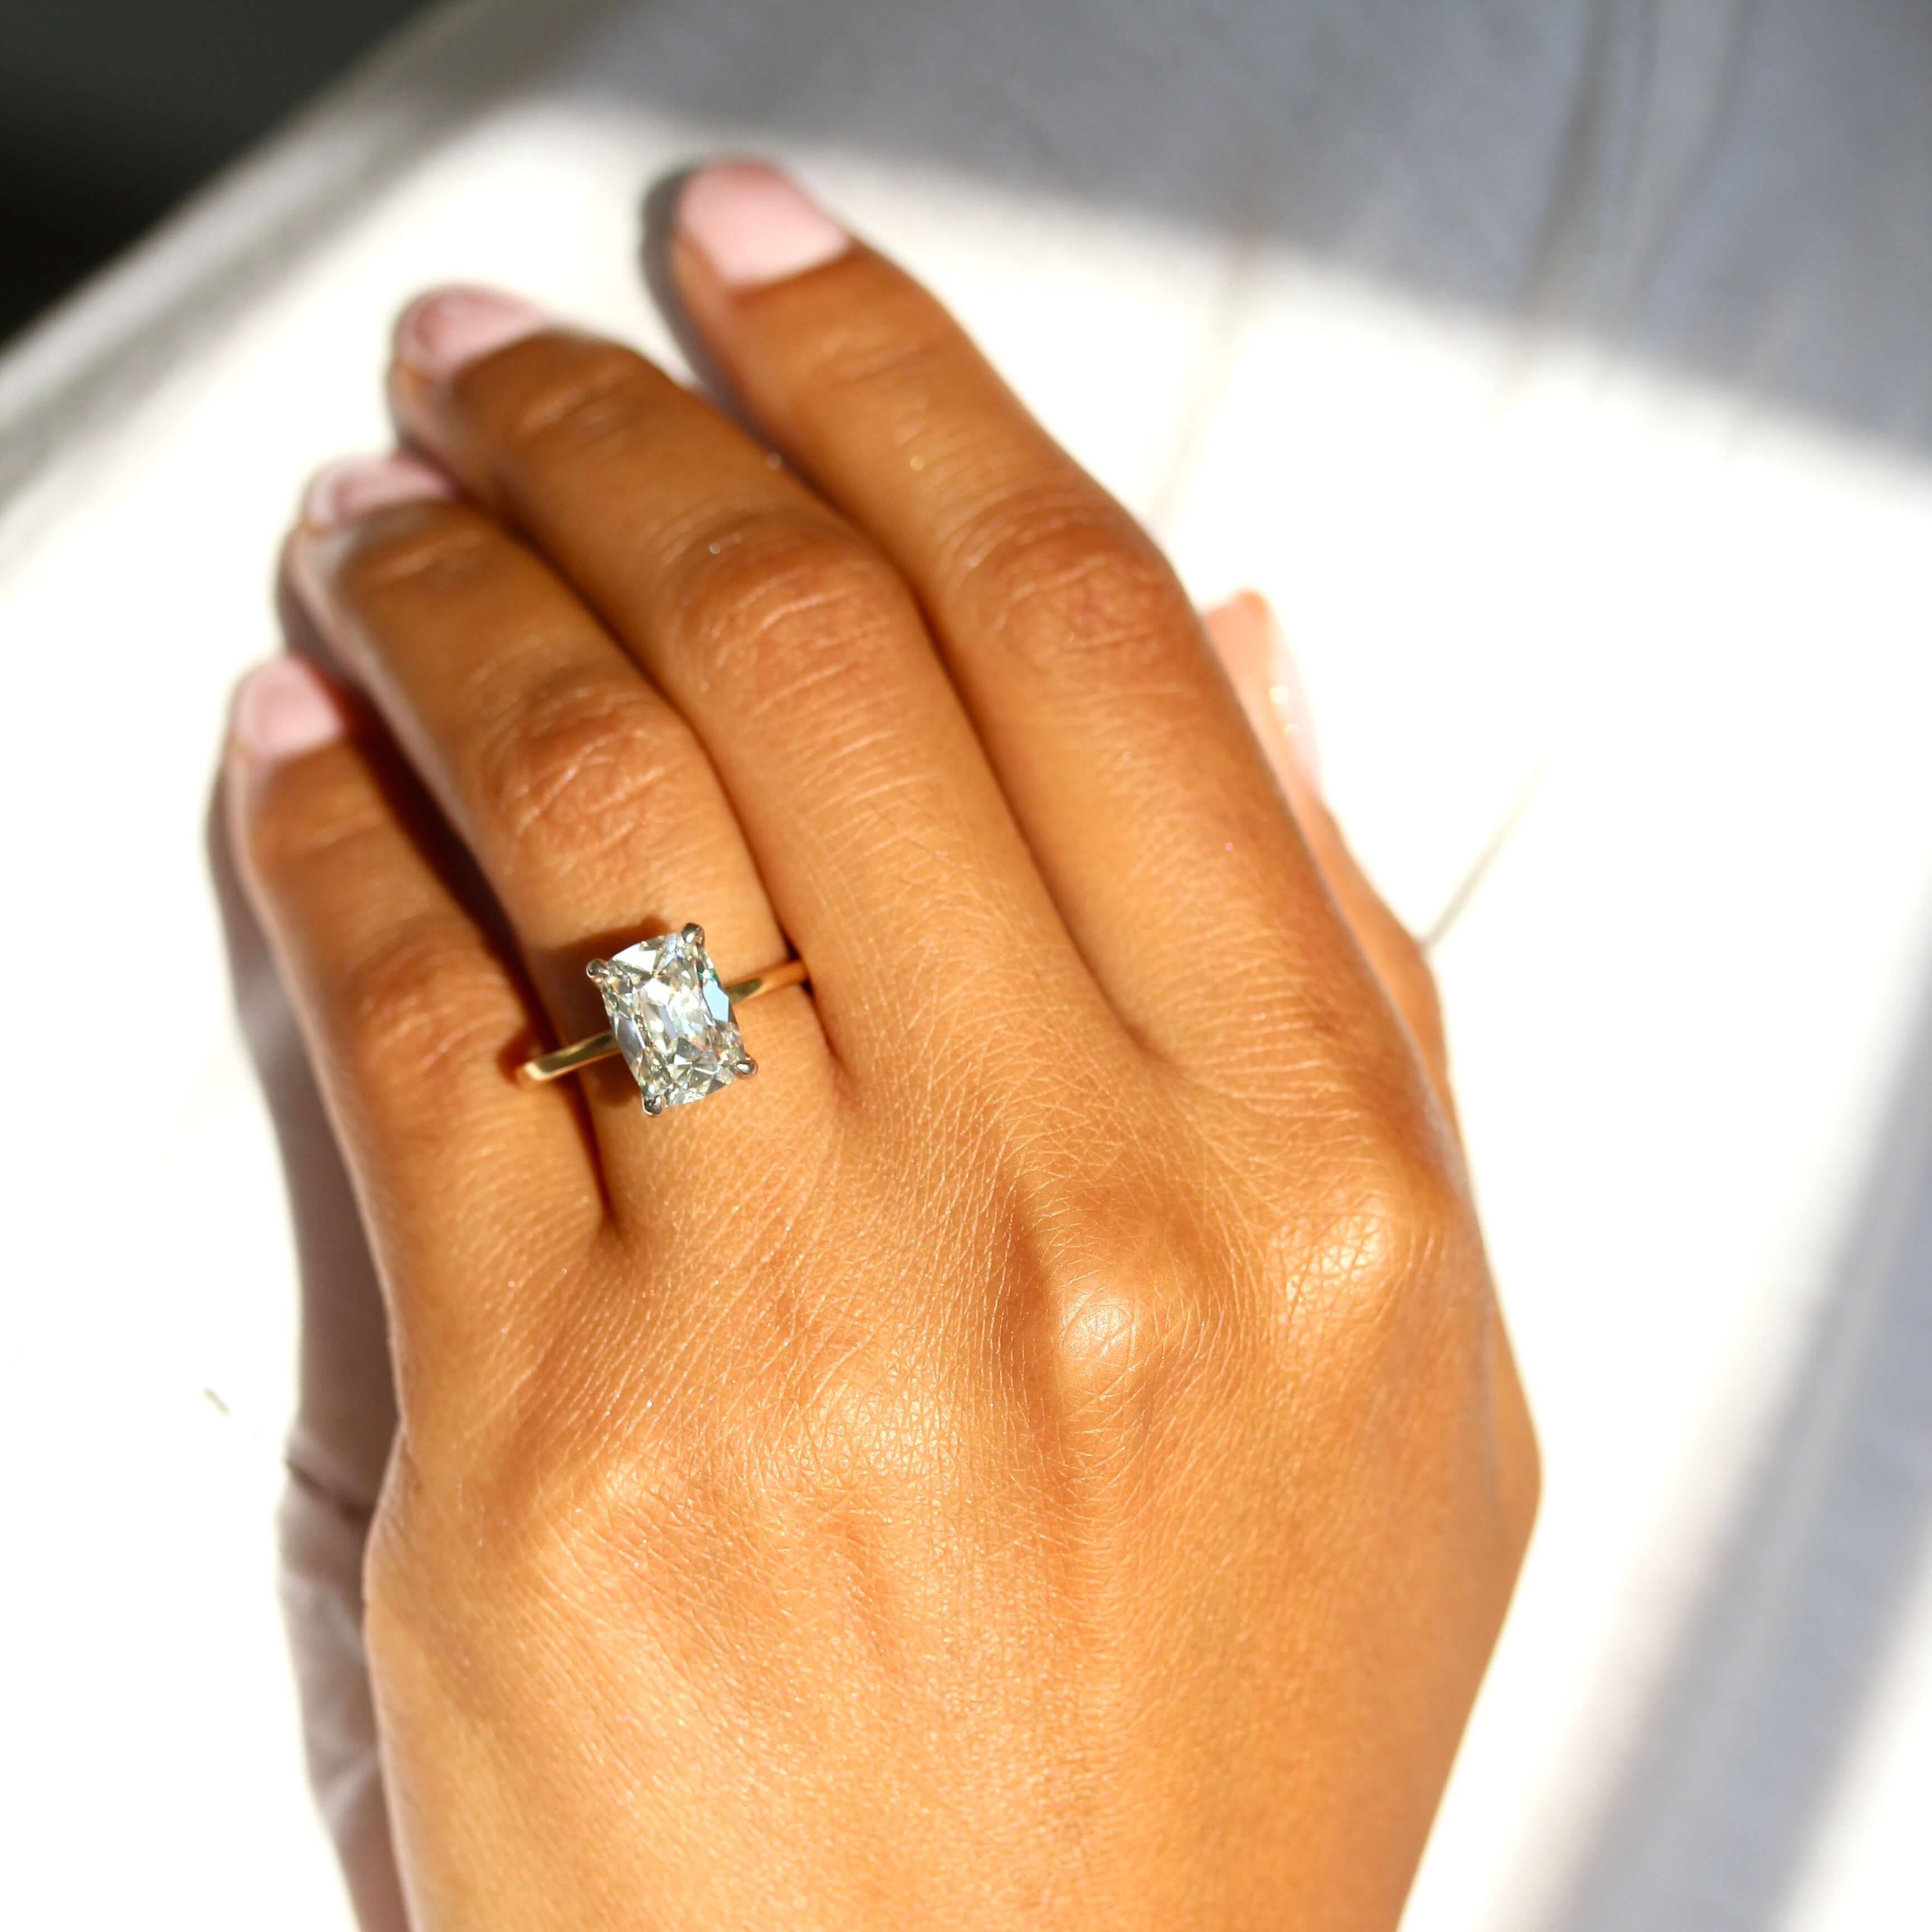 Buying a $20,000 Diamond Engagement Ring | The Diamond Pro